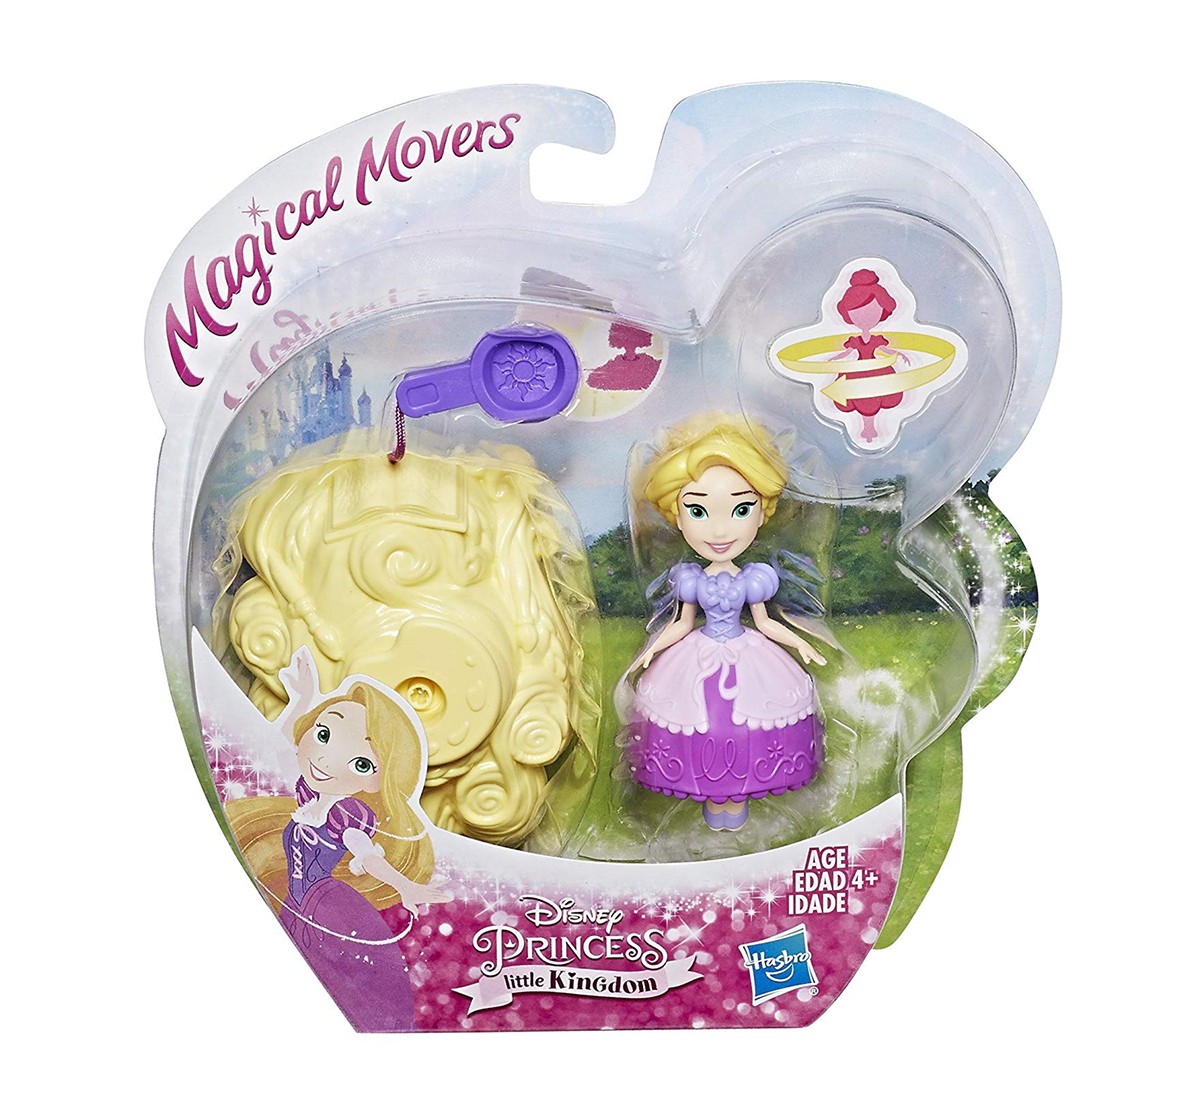 Disney Princess Magical Movers Fashion Dolls  - Rapunzel Dolls & Accessories for age 3Y+ 